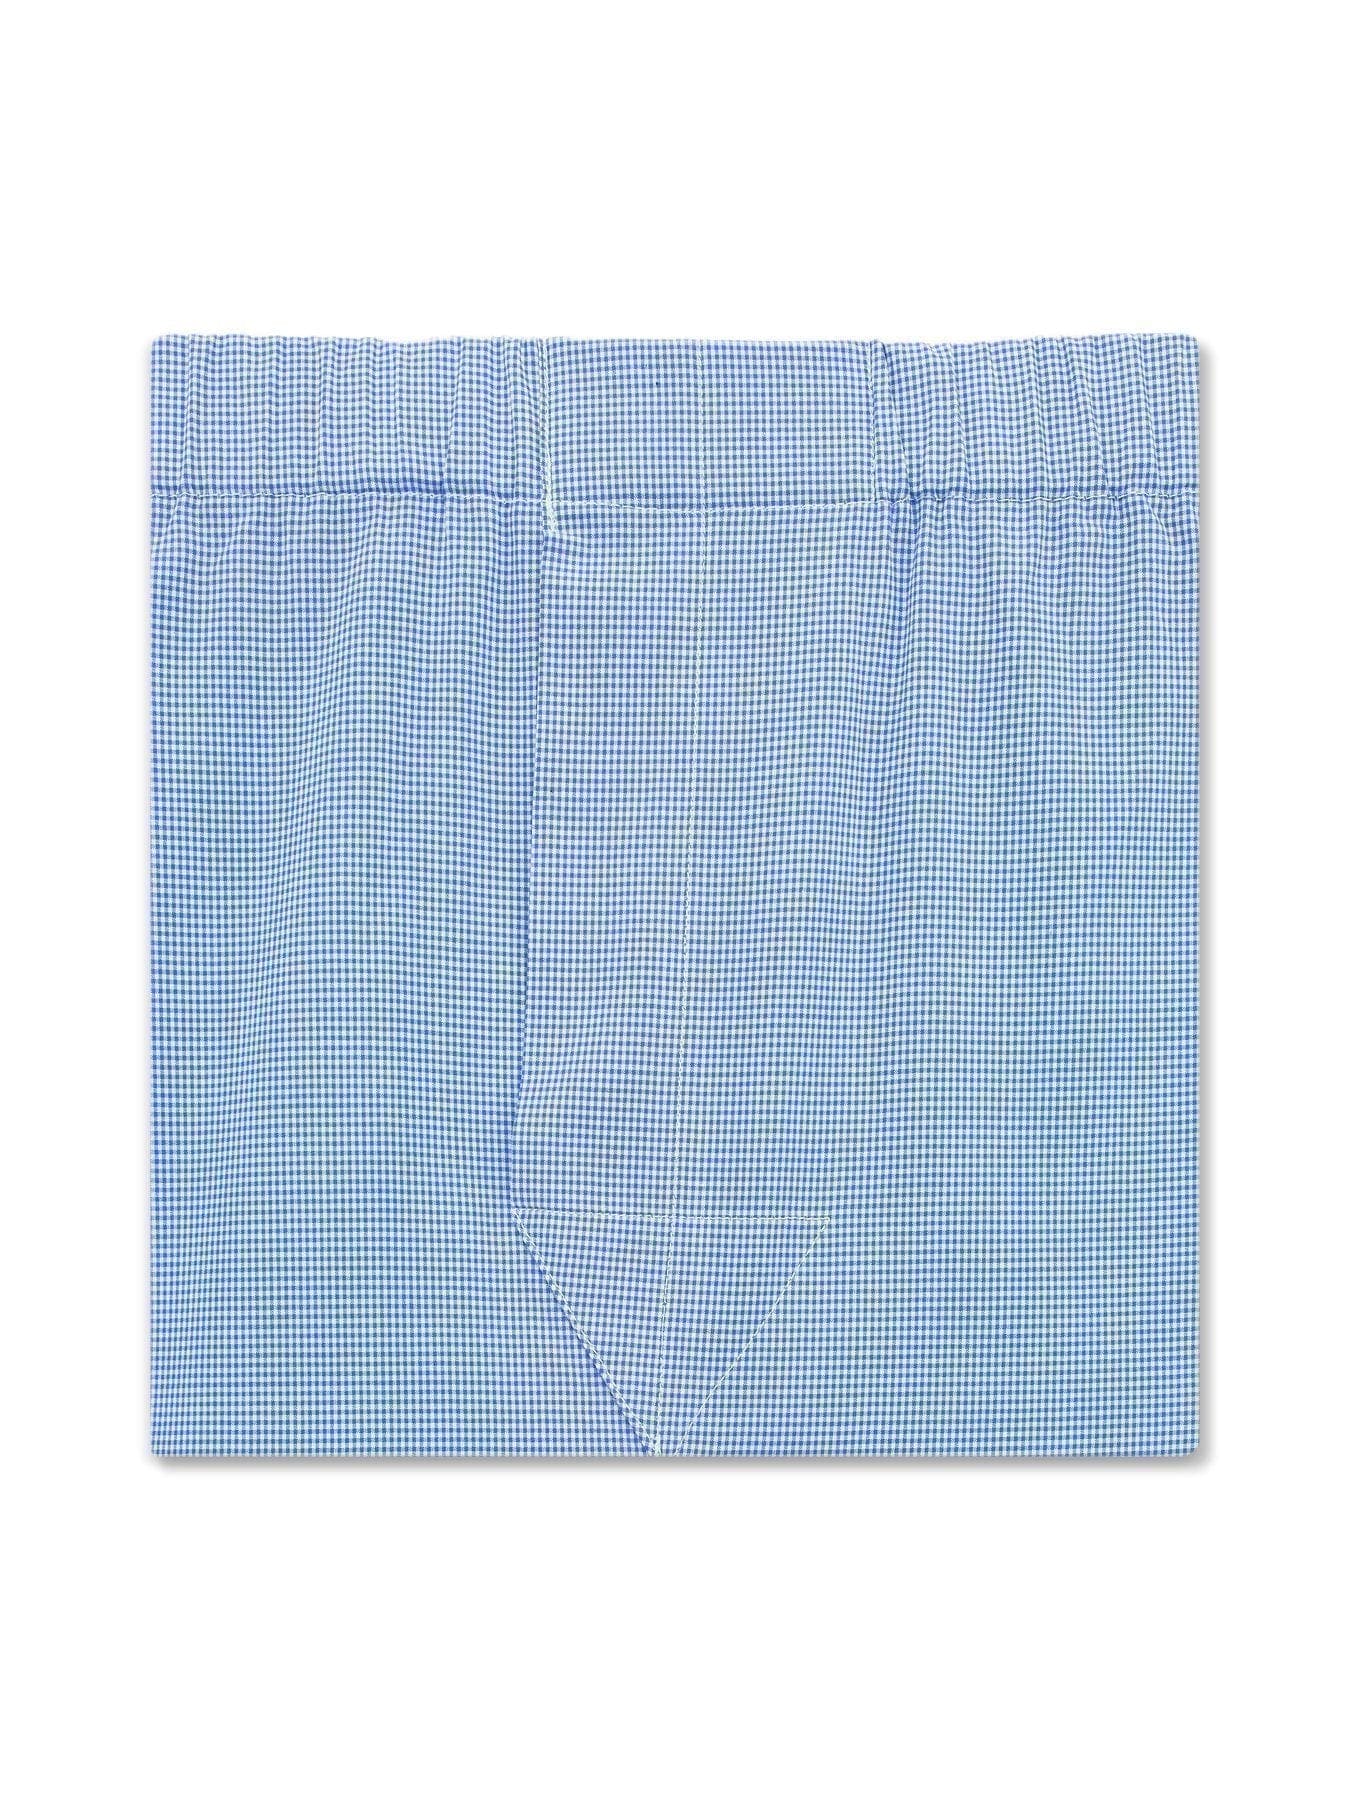 Classic Boxer Shorts in a Blue & White Shepherds Check Poplin Cotton